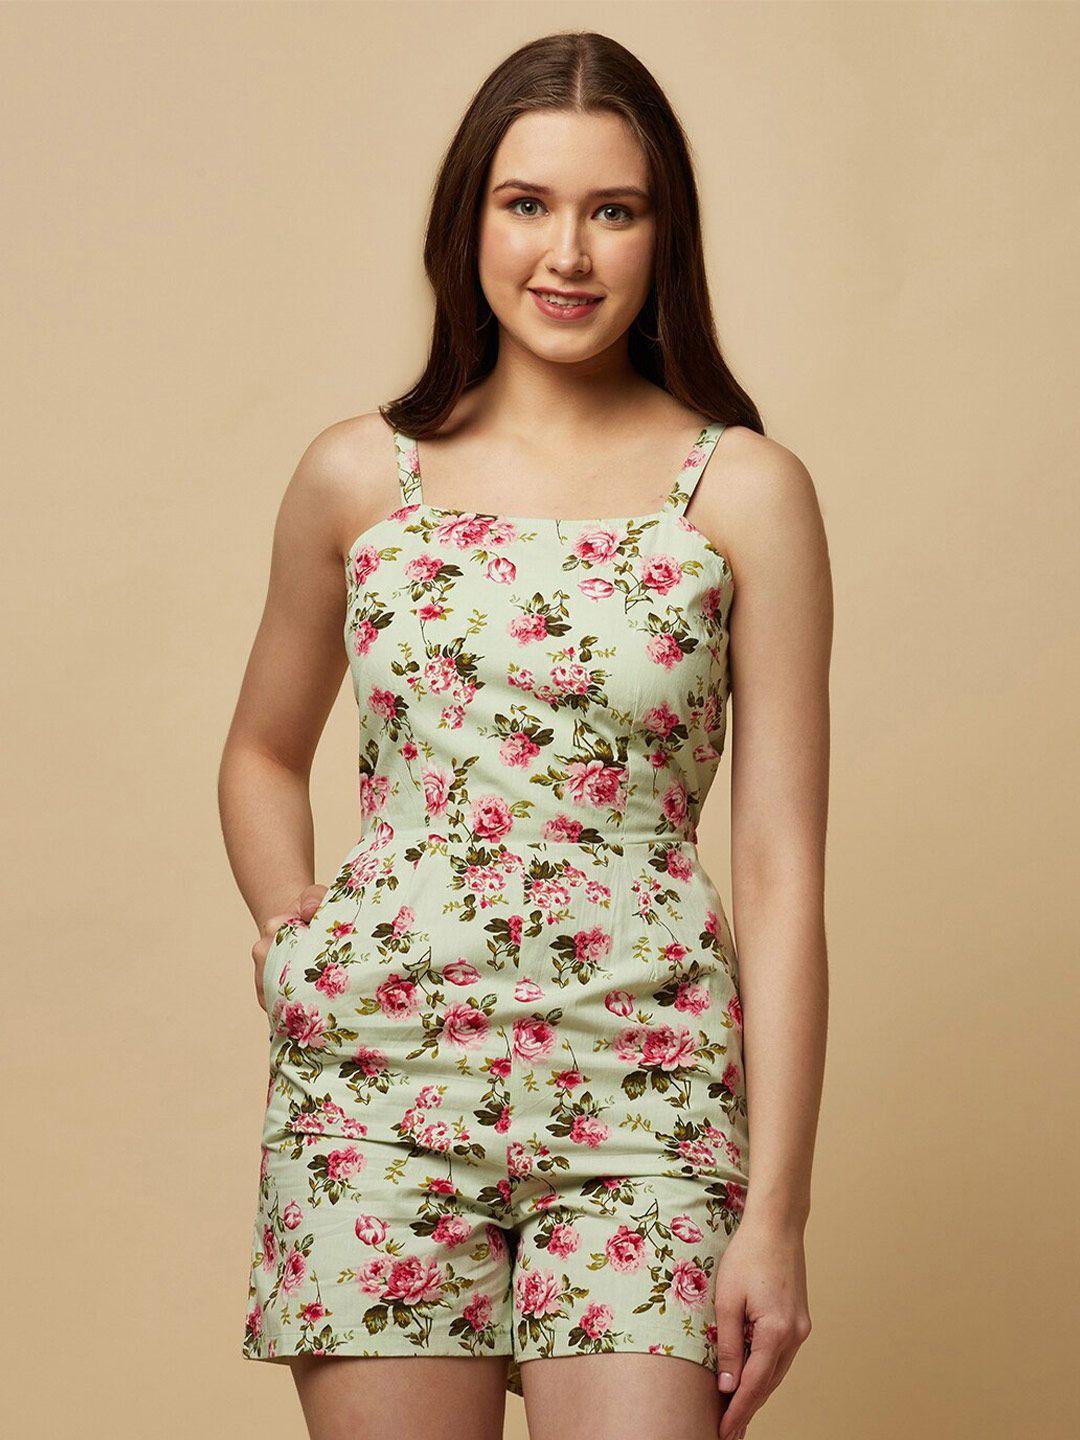 raassio cotton shoulder strap floral printed jumpsuit